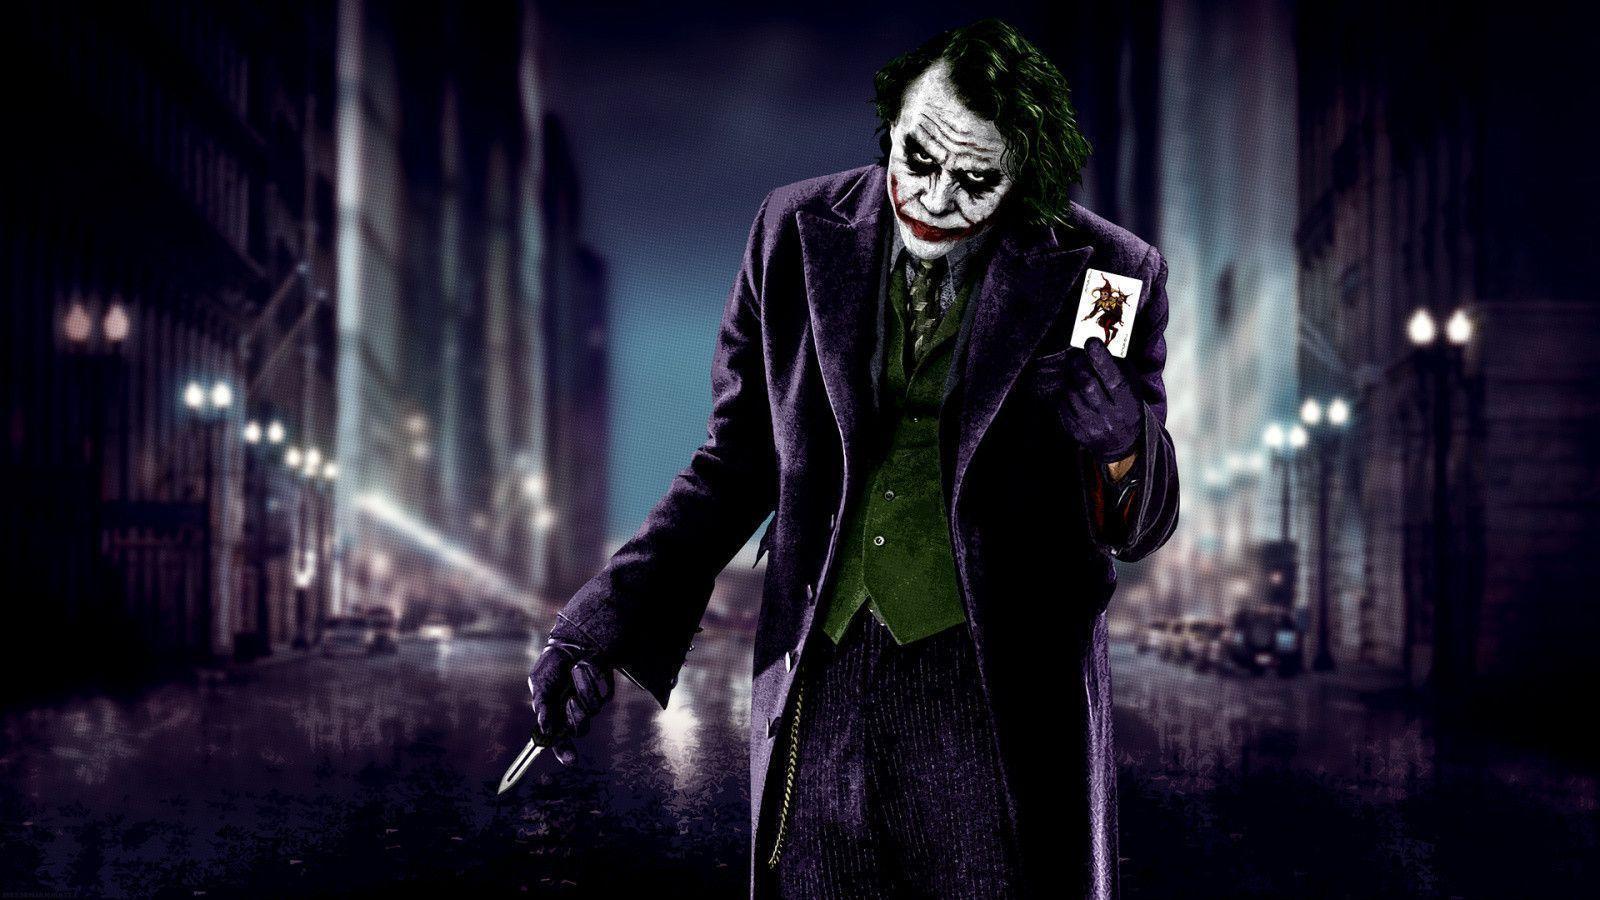 Batman The Dark Knight Wallpapers Joker - Wallpaper Cave